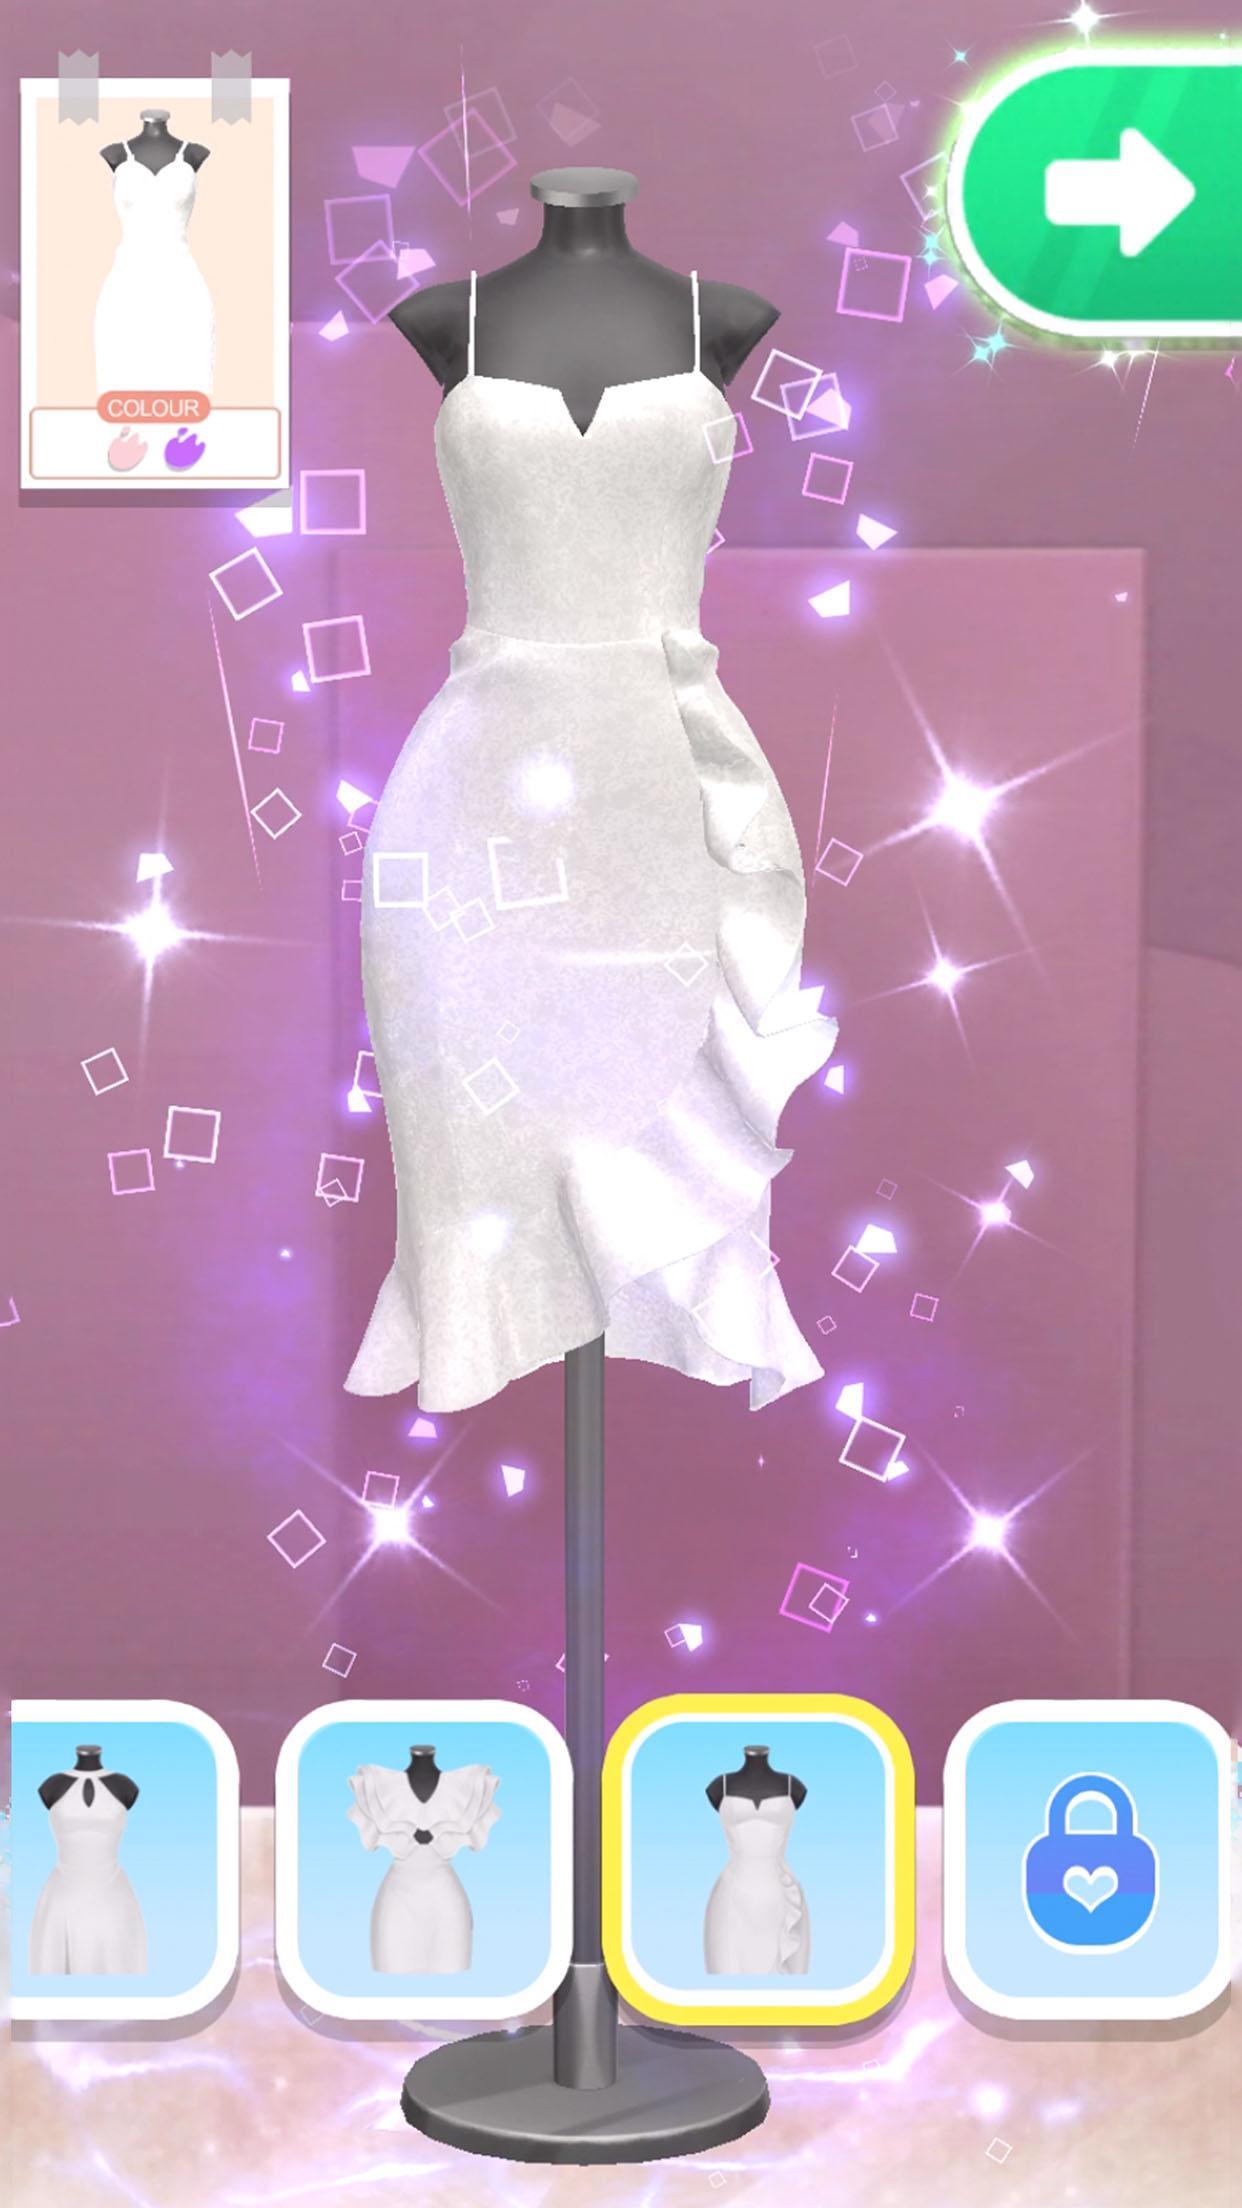 Yes, that dress! screenshot